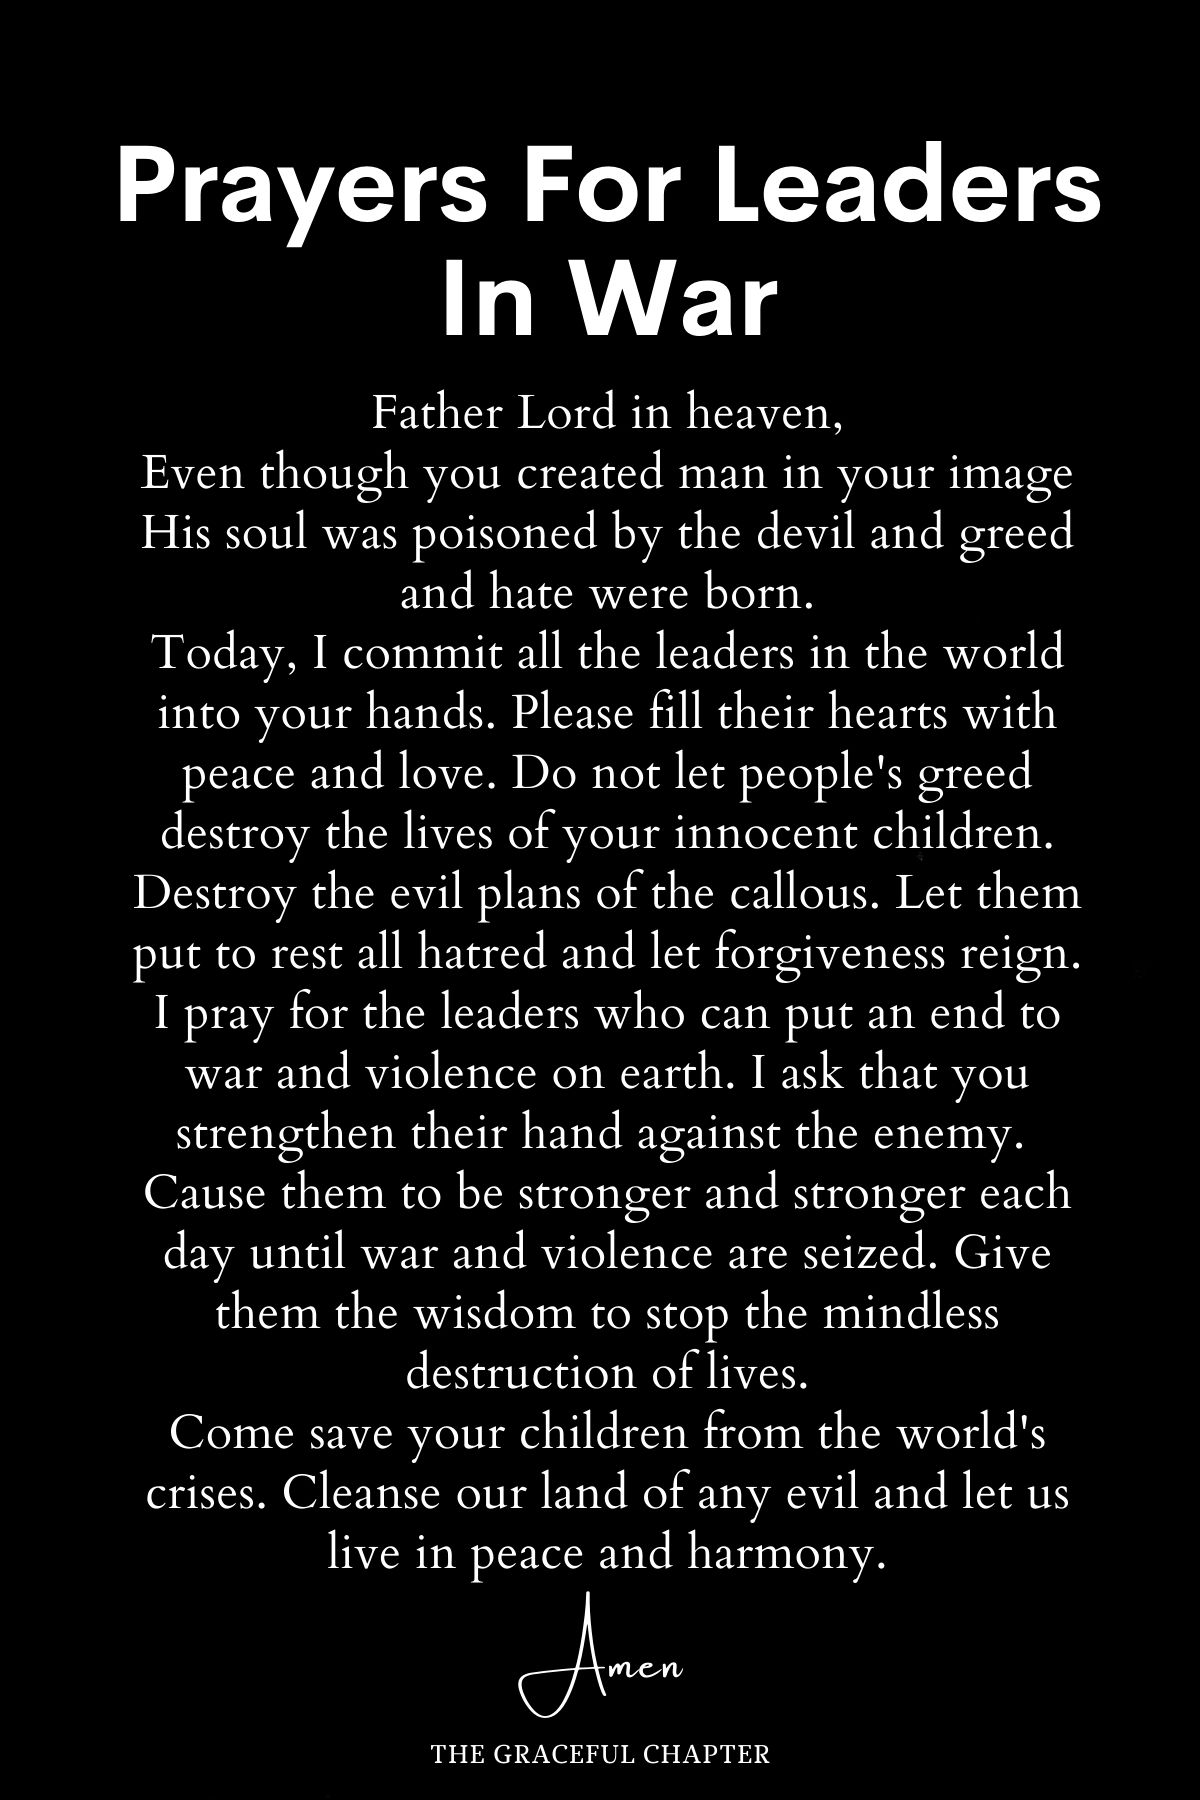 Prayers for leaders in war